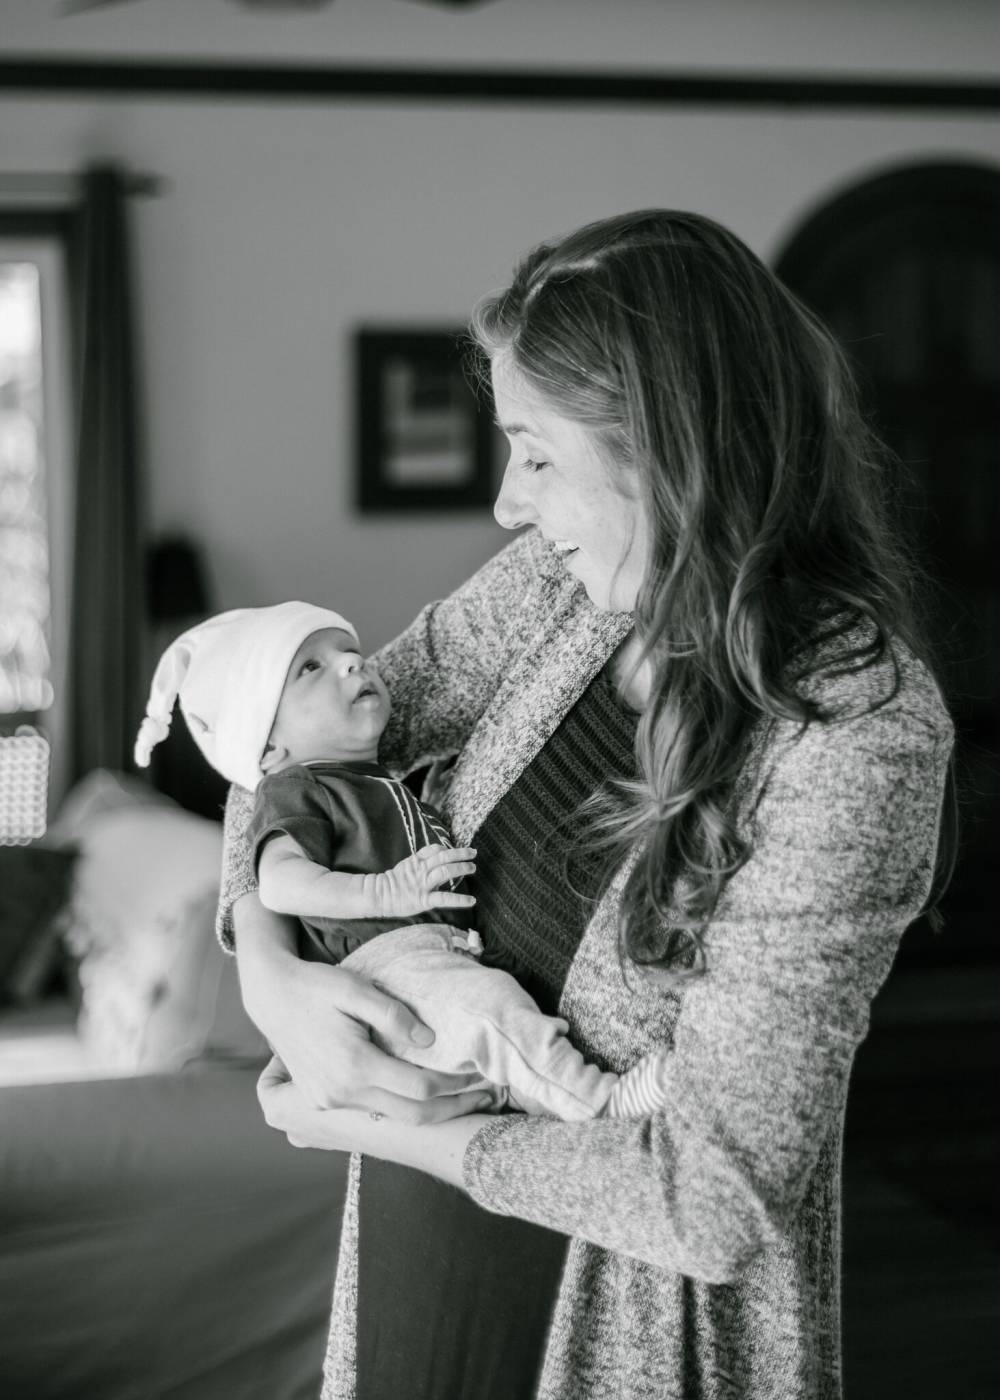 Kate with her newborn son, Max as a newborn. Photo: Sam Zaucher